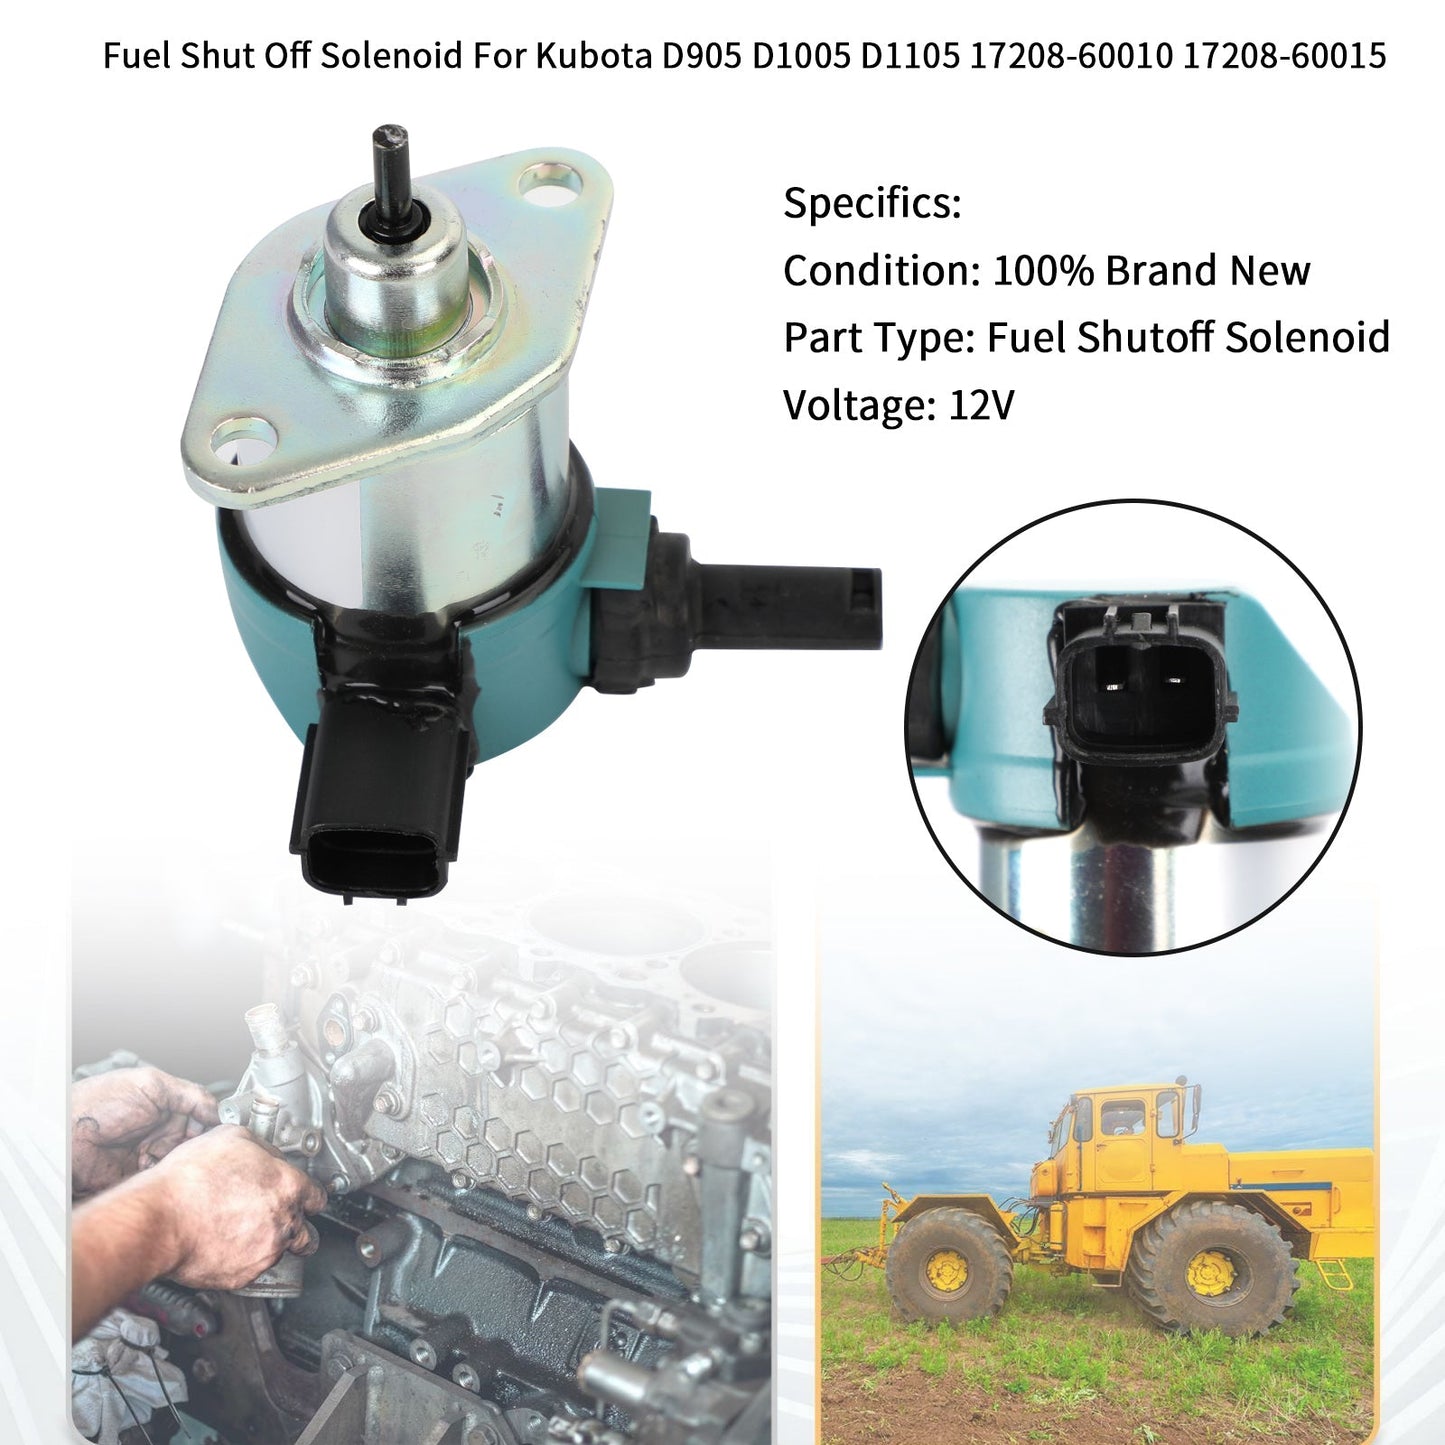 Fuel Shut Off Solenoid For Kubota D905 D1005 D1105 17208-60010 17208-60015